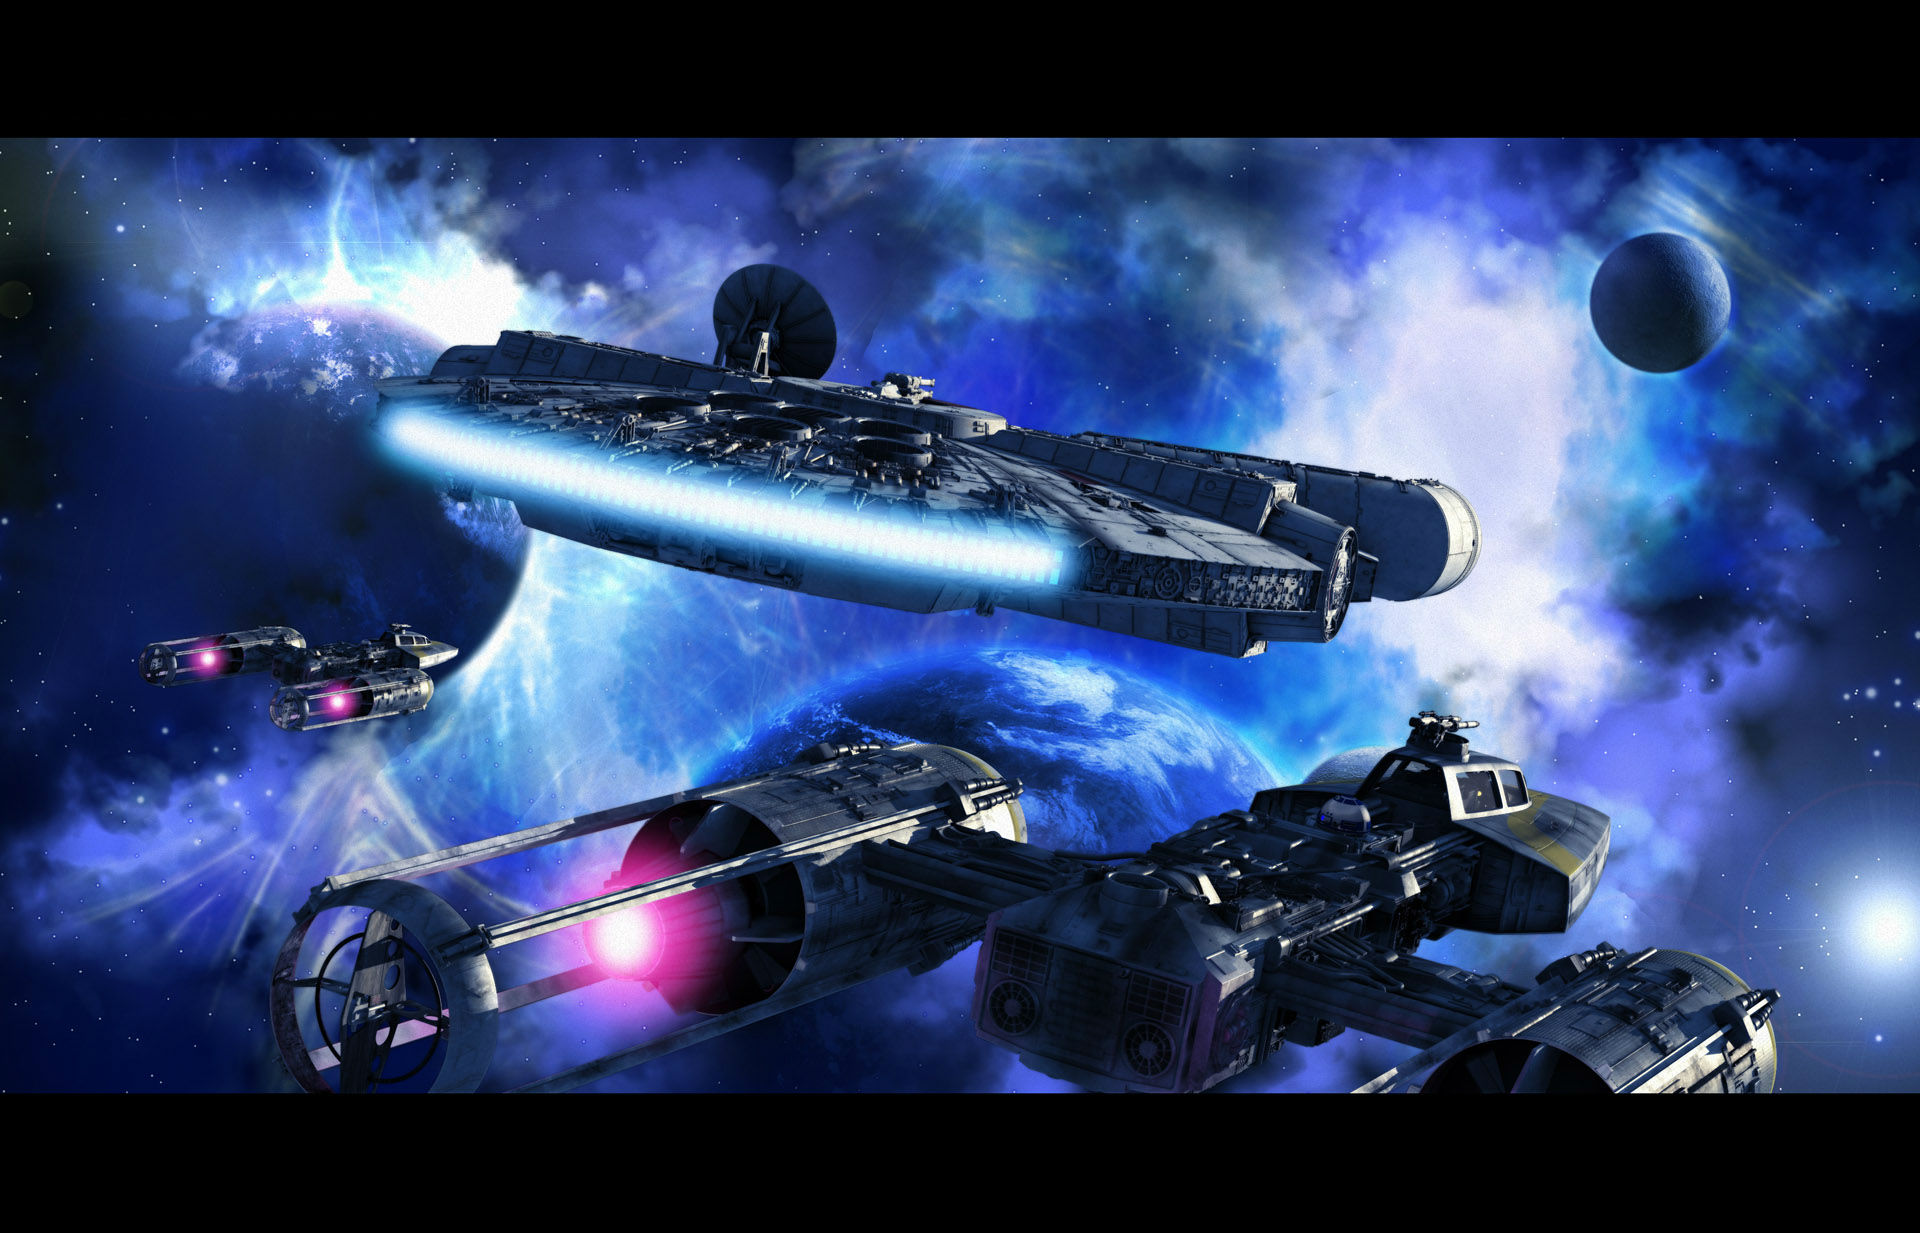 spaceship, sci fi, star wars, millennium falcon, planet, space